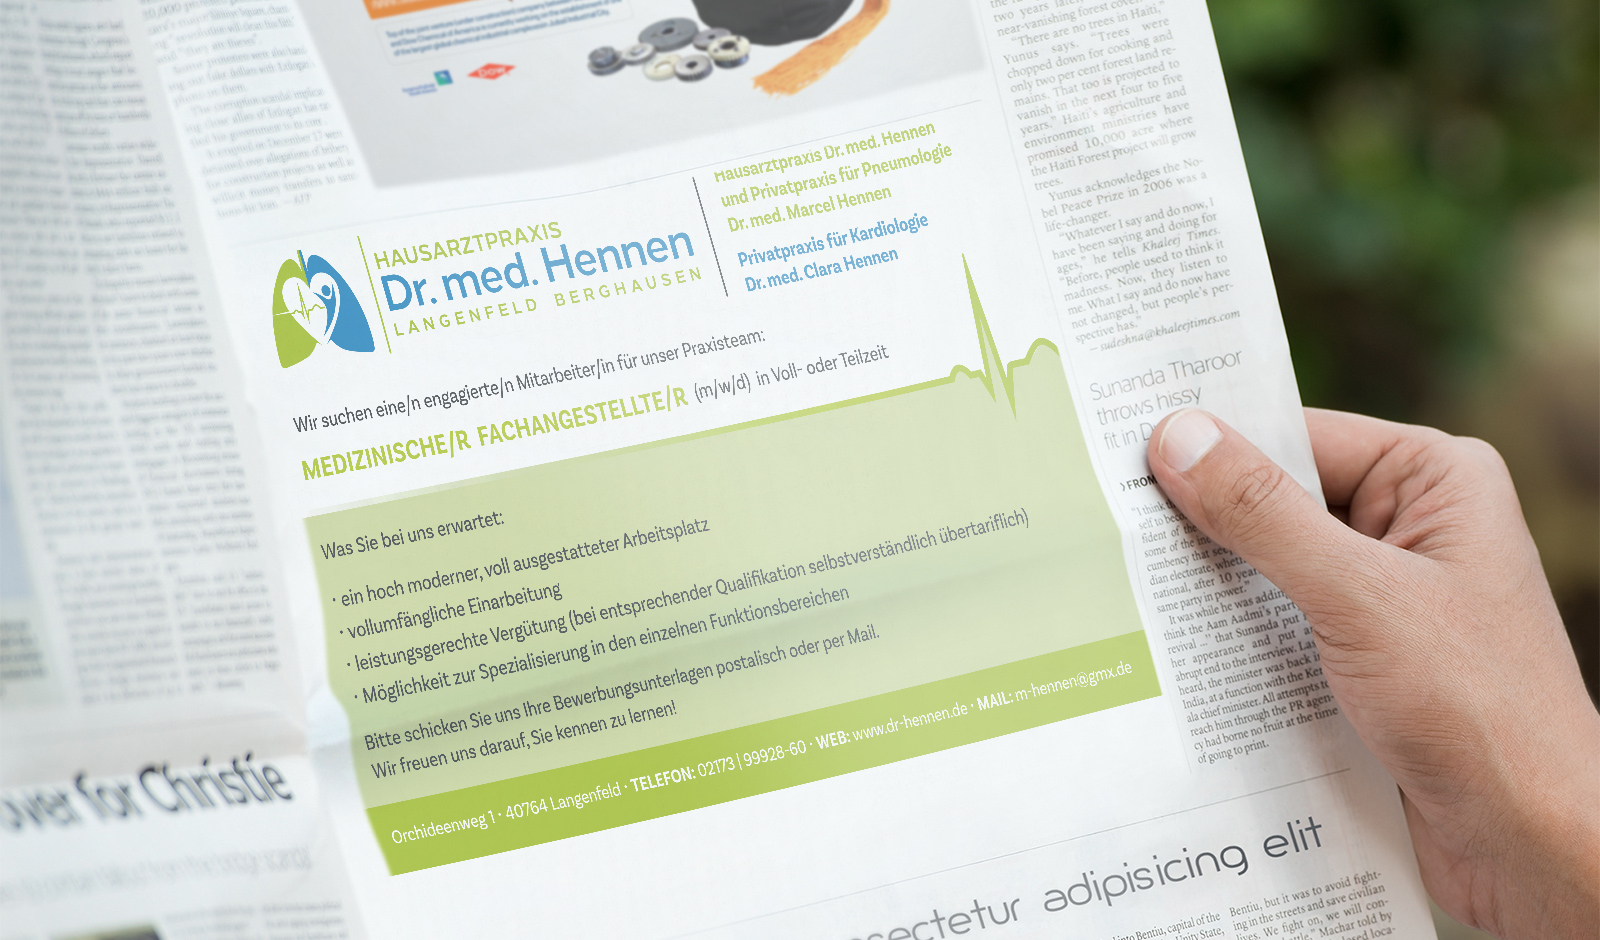 Hausarztpraxis Dr. Marcel Hennen Langenfeld Berghausen, Zeitungsanzeige